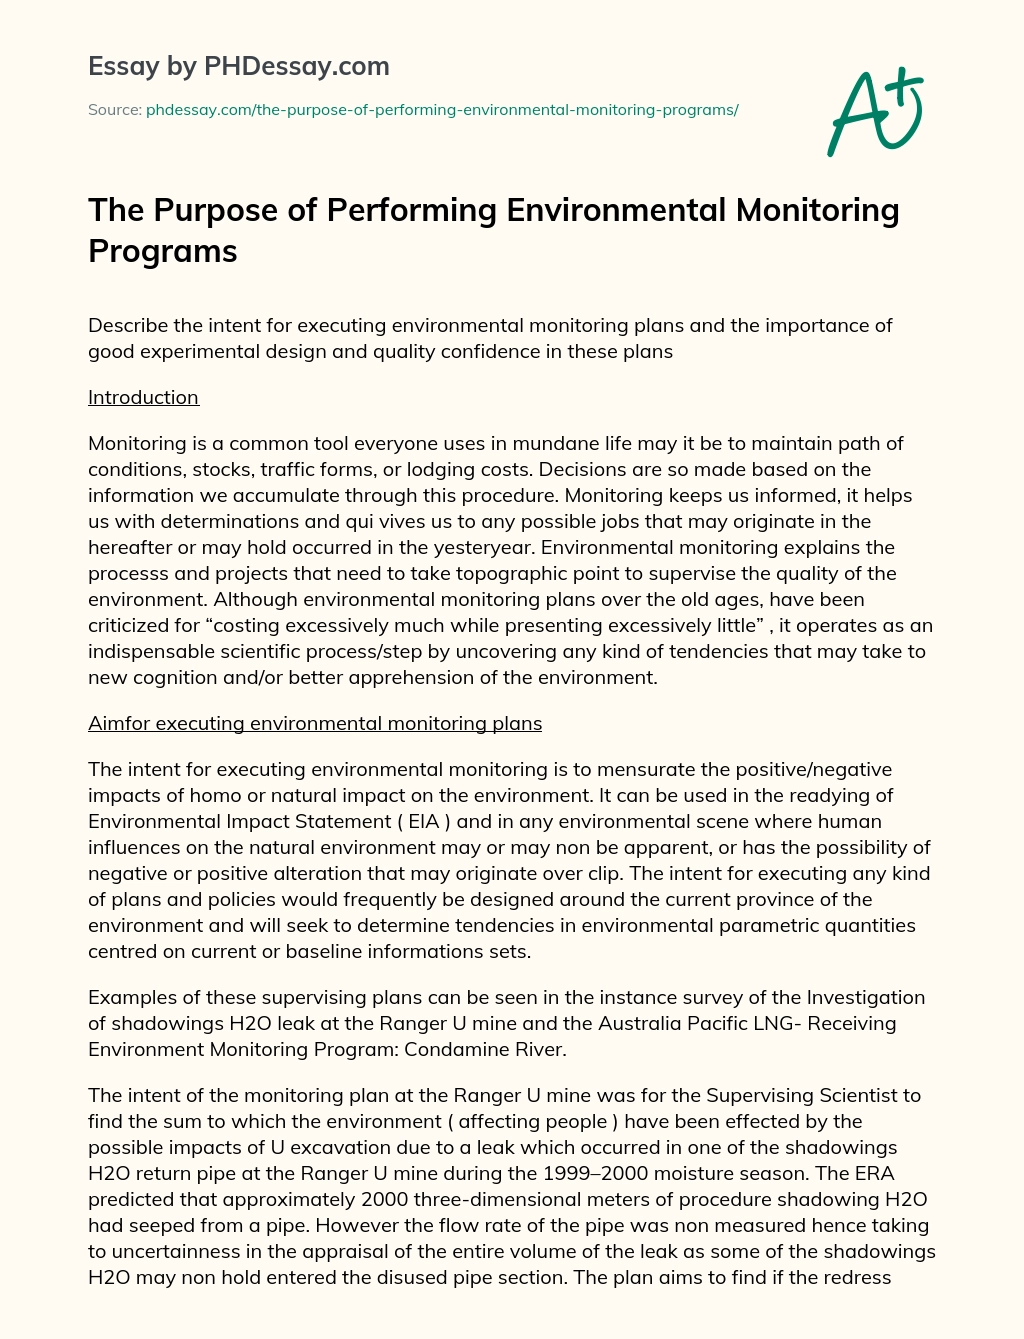 The Purpose of Performing Environmental Monitoring Programs essay